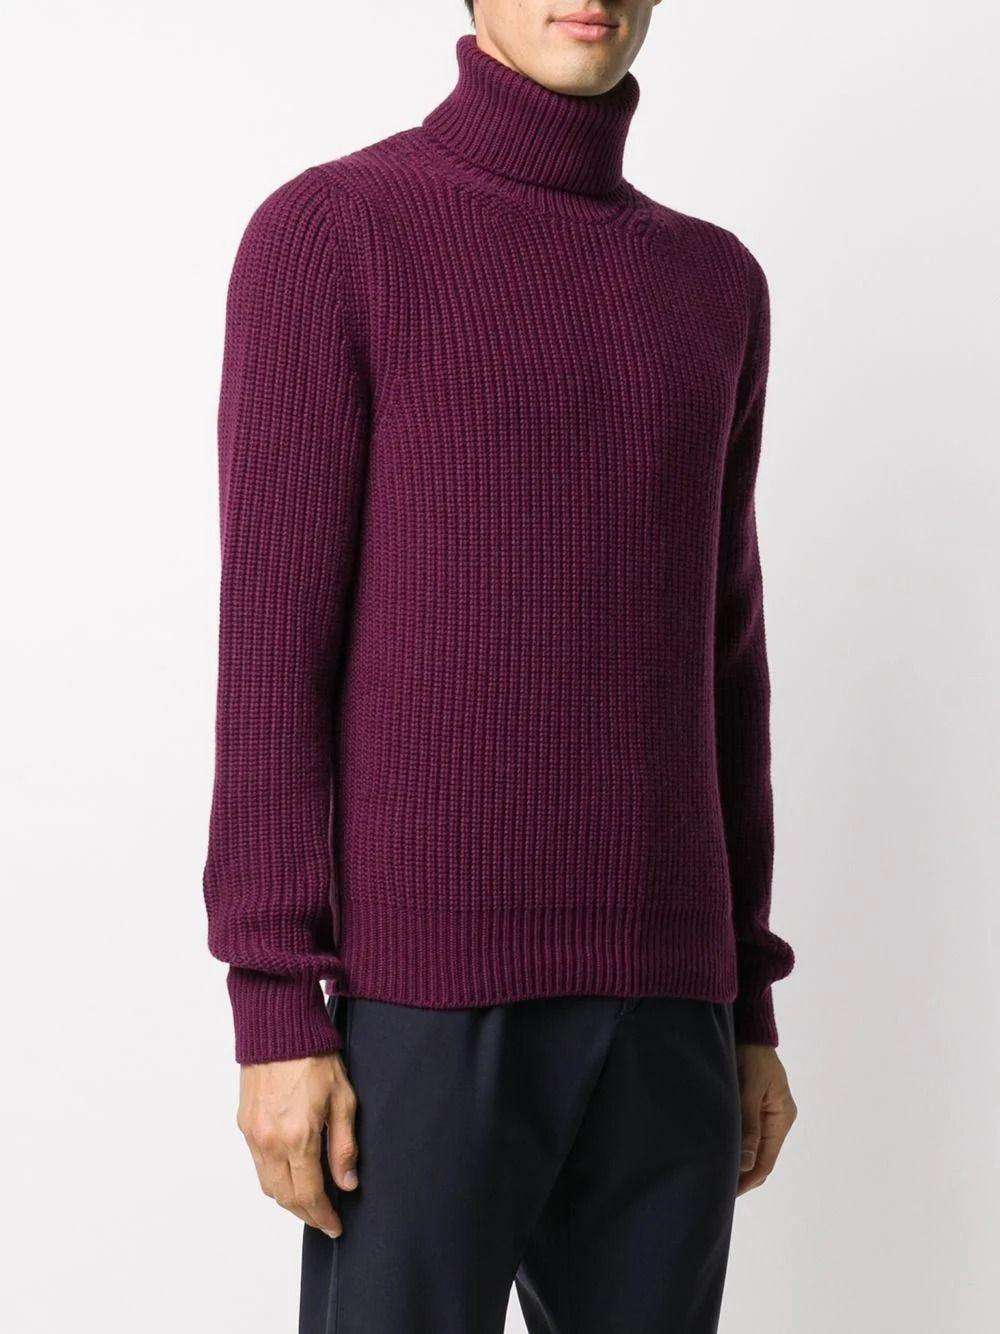 Tom Ford Chunky Knit Turtleneck Jumper in Purple for Men - Lyst